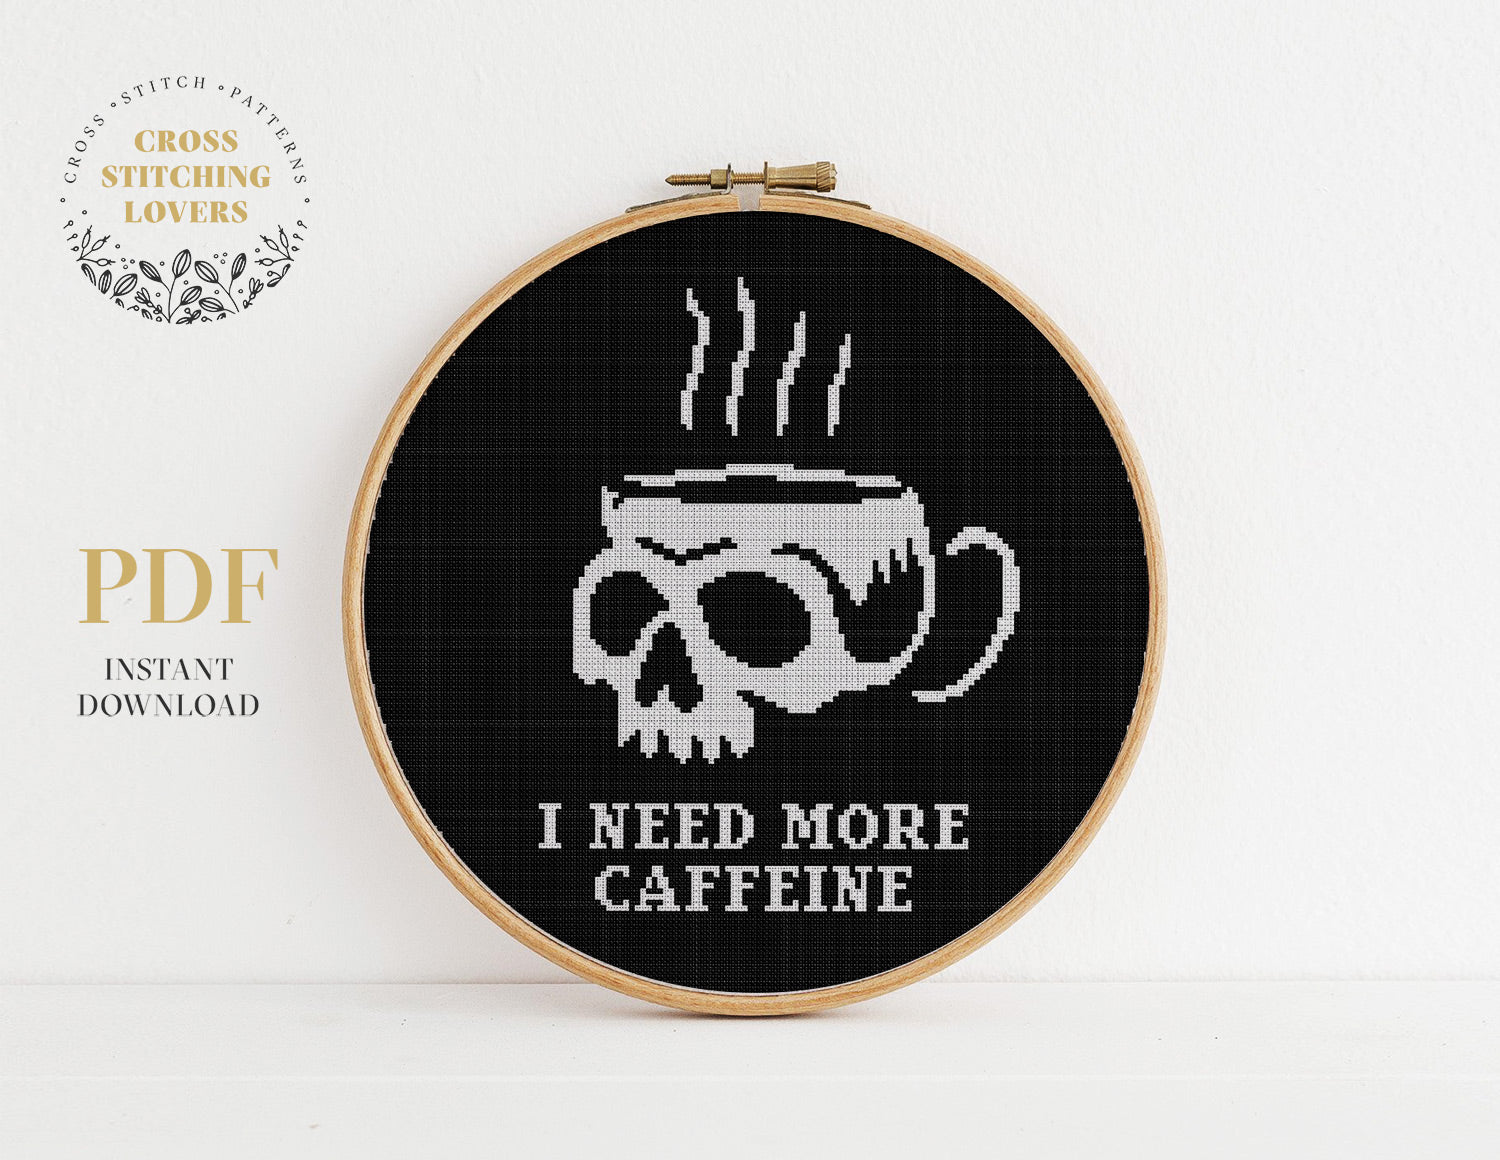 I NEED MORE CAFFEINE - Cross stitch pattern